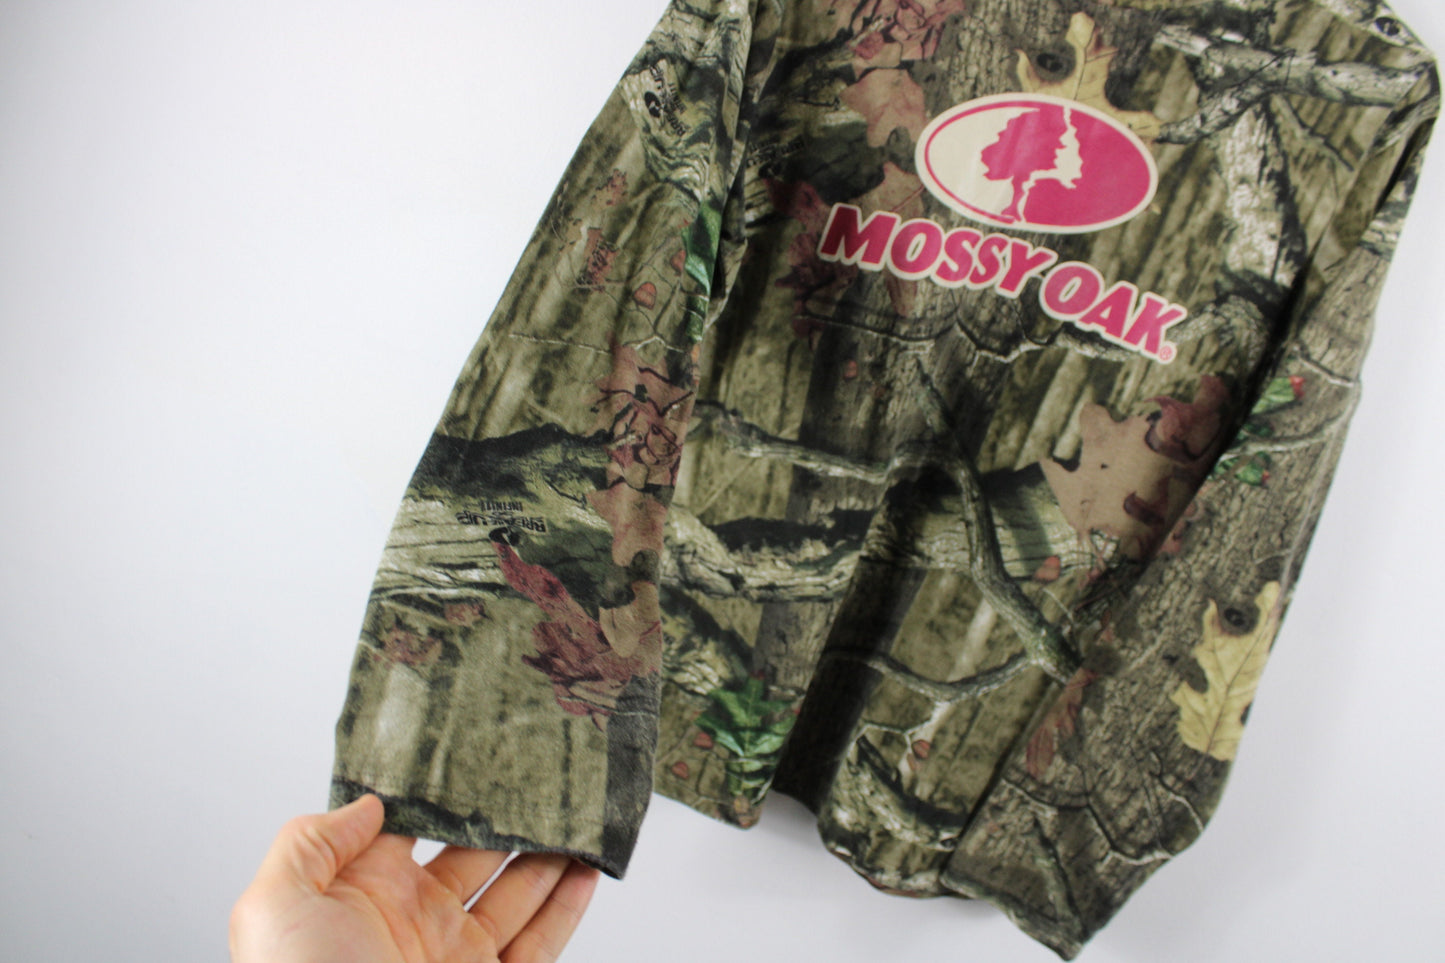 Realtree T-Shirt / Vintage 90s Camouflage Hunting Tee Shirt / Hunter Clothing